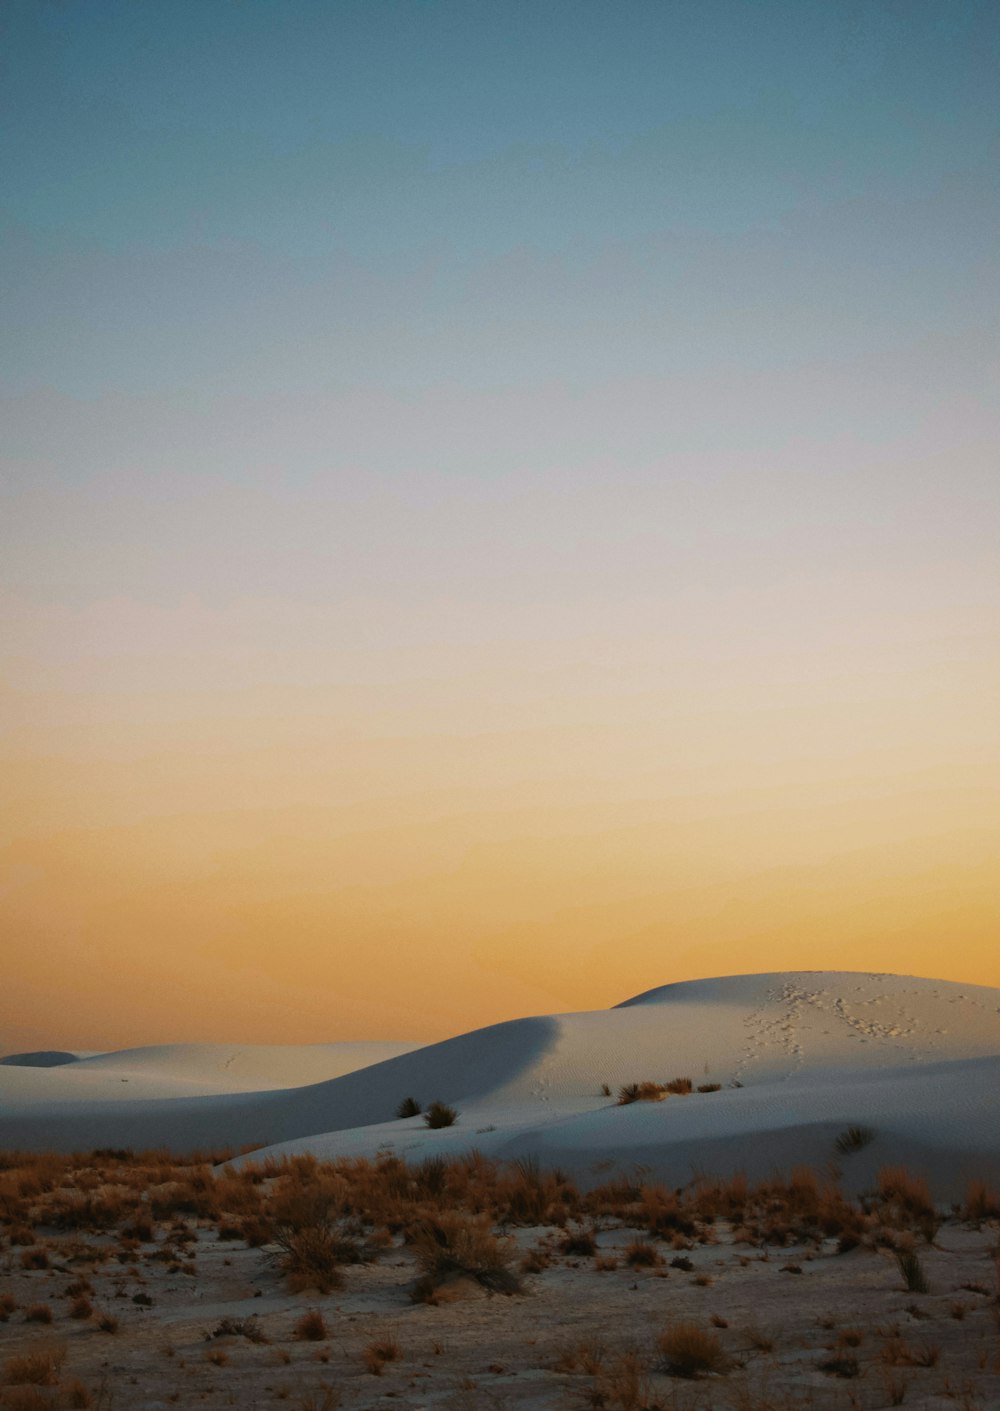 a desert landscape with a blue sky